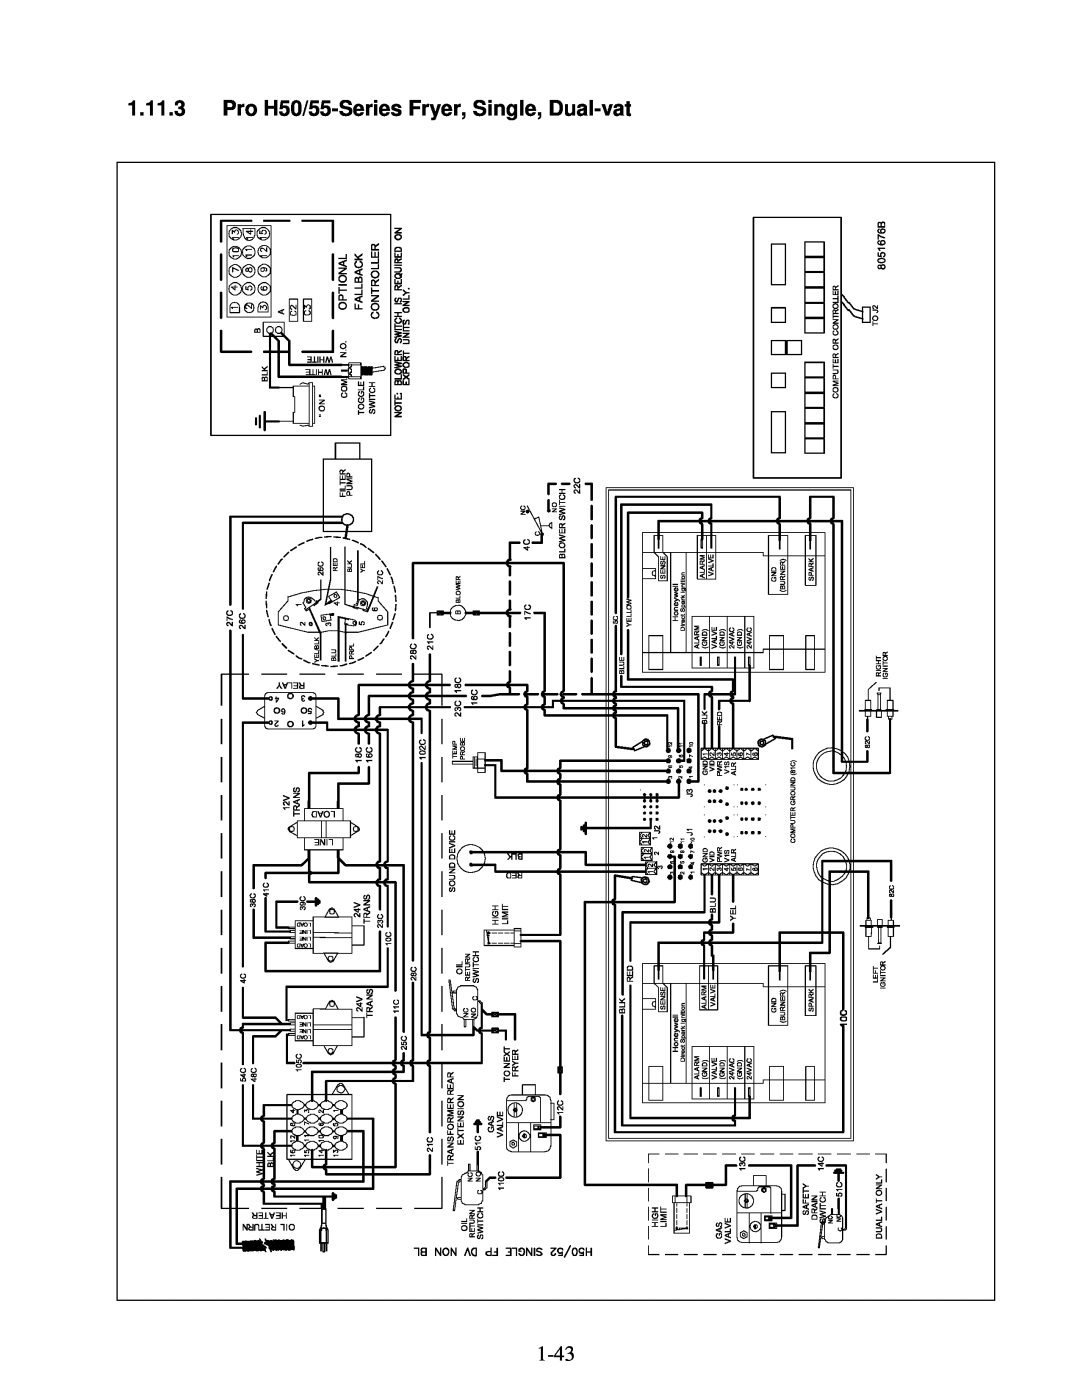 Frymaster manual 1.11.3Pro H50/55-SeriesFryer, Single, Dual-vat 